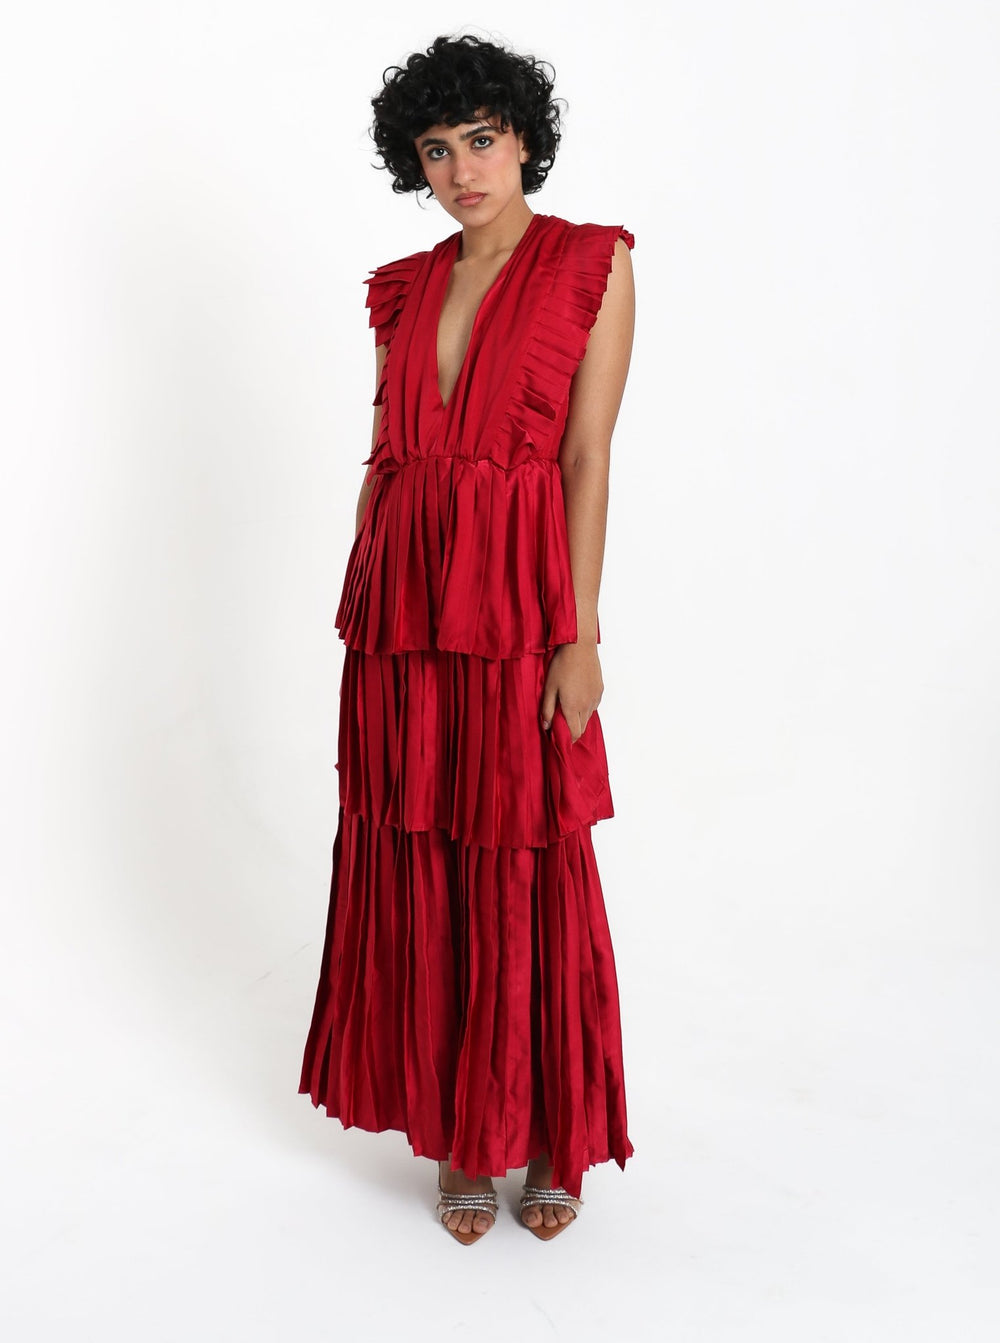 Diora - rojo - Lend the Trend renta de vestidos mexico